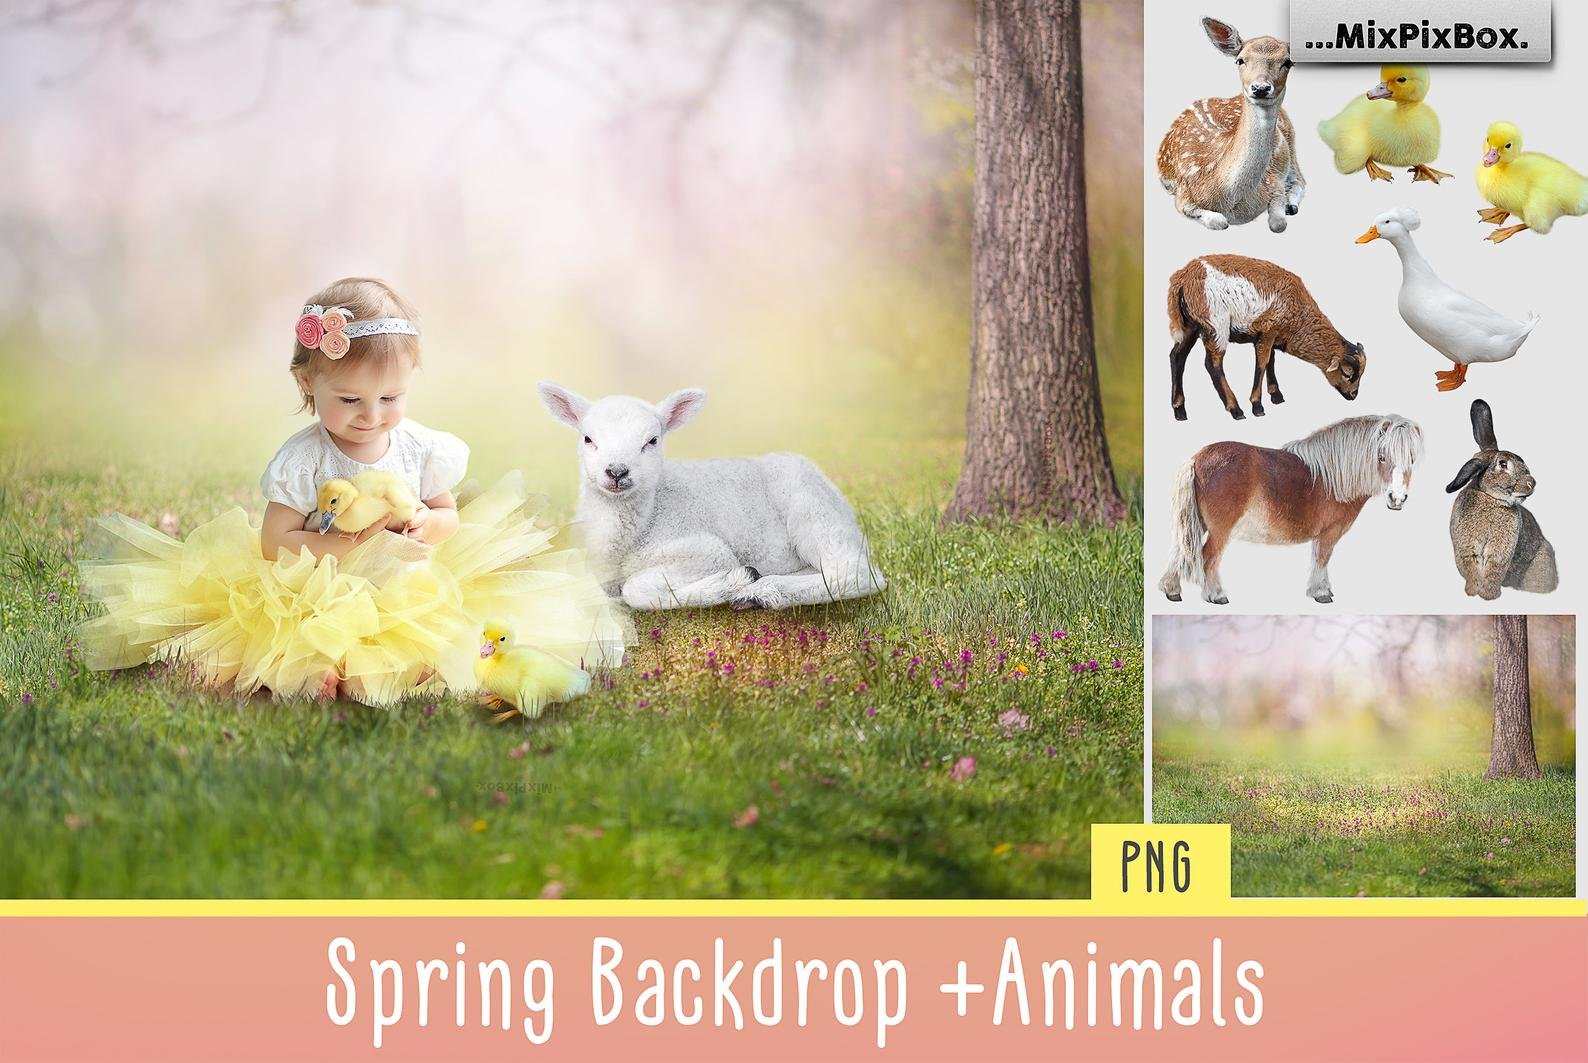 Spring Backdrop + Animalscover image.